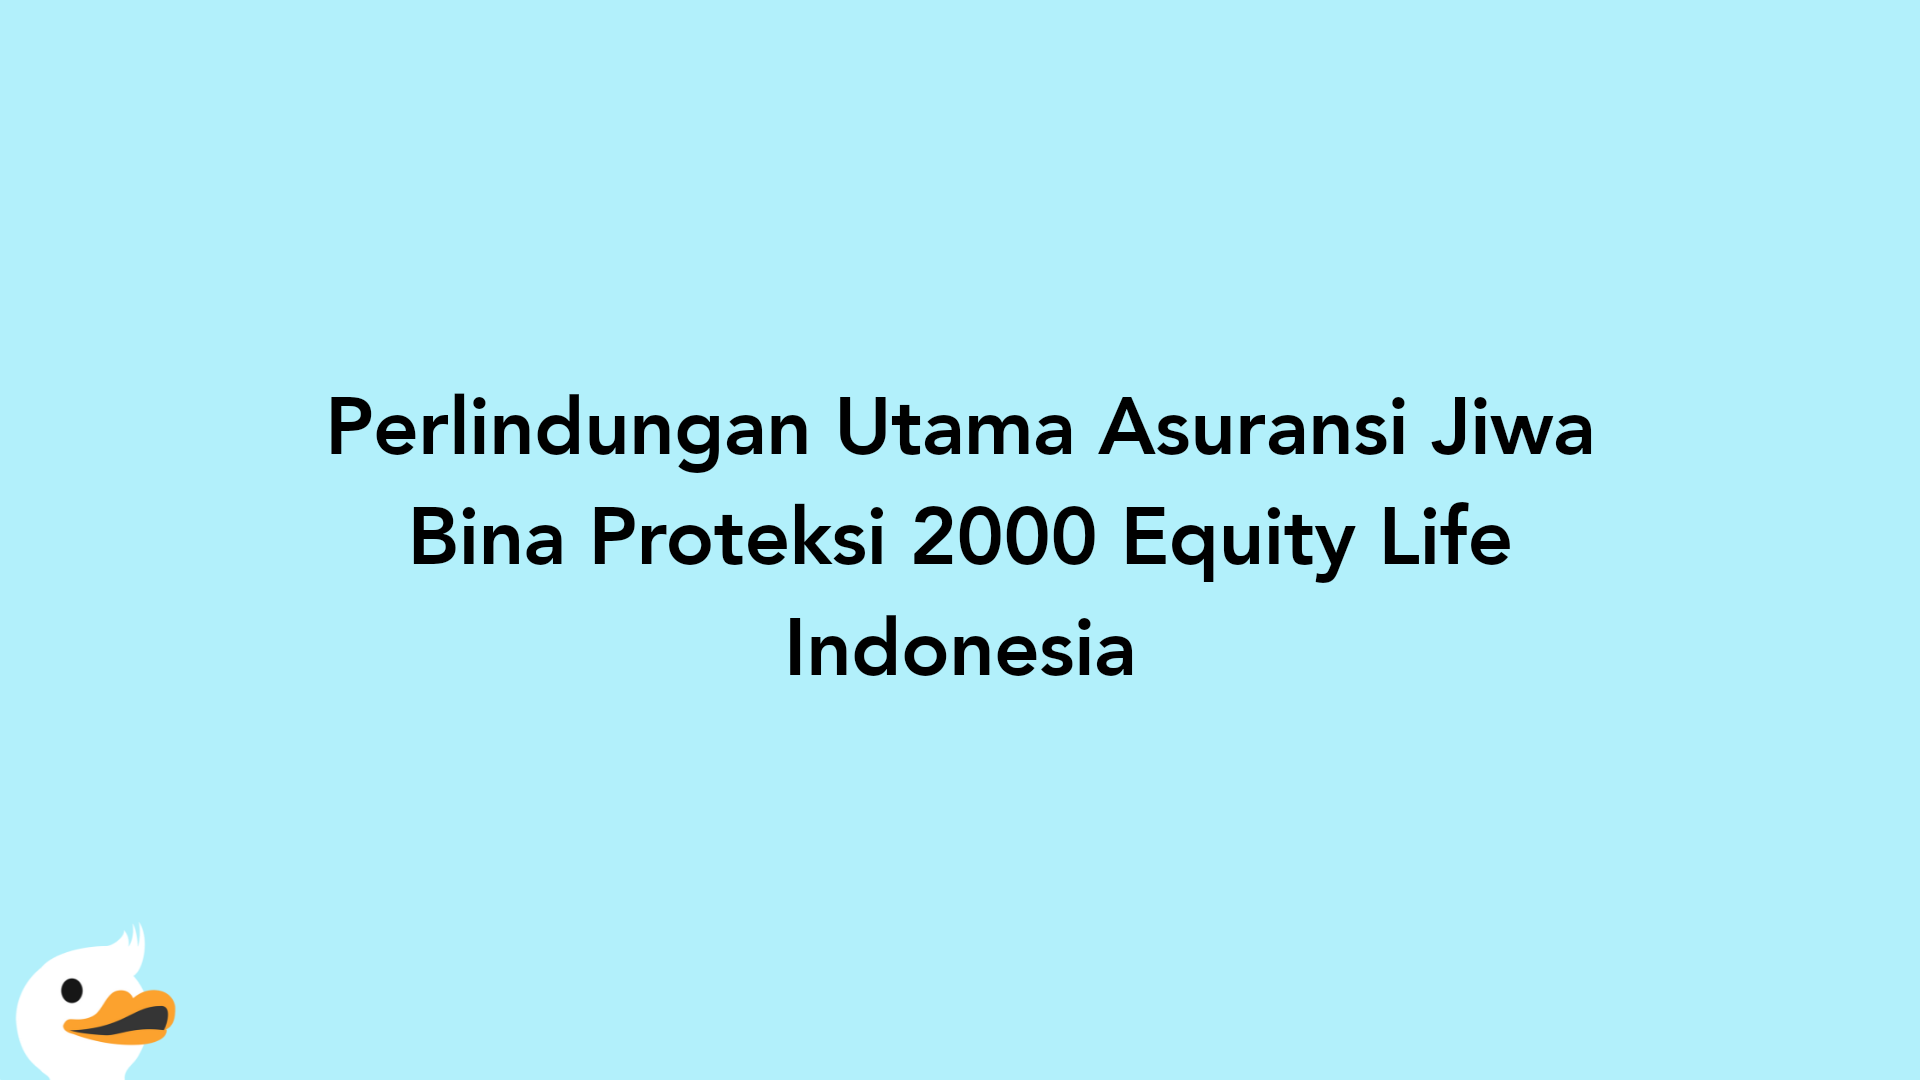 Perlindungan Utama Asuransi Jiwa Bina Proteksi 2000 Equity Life Indonesia